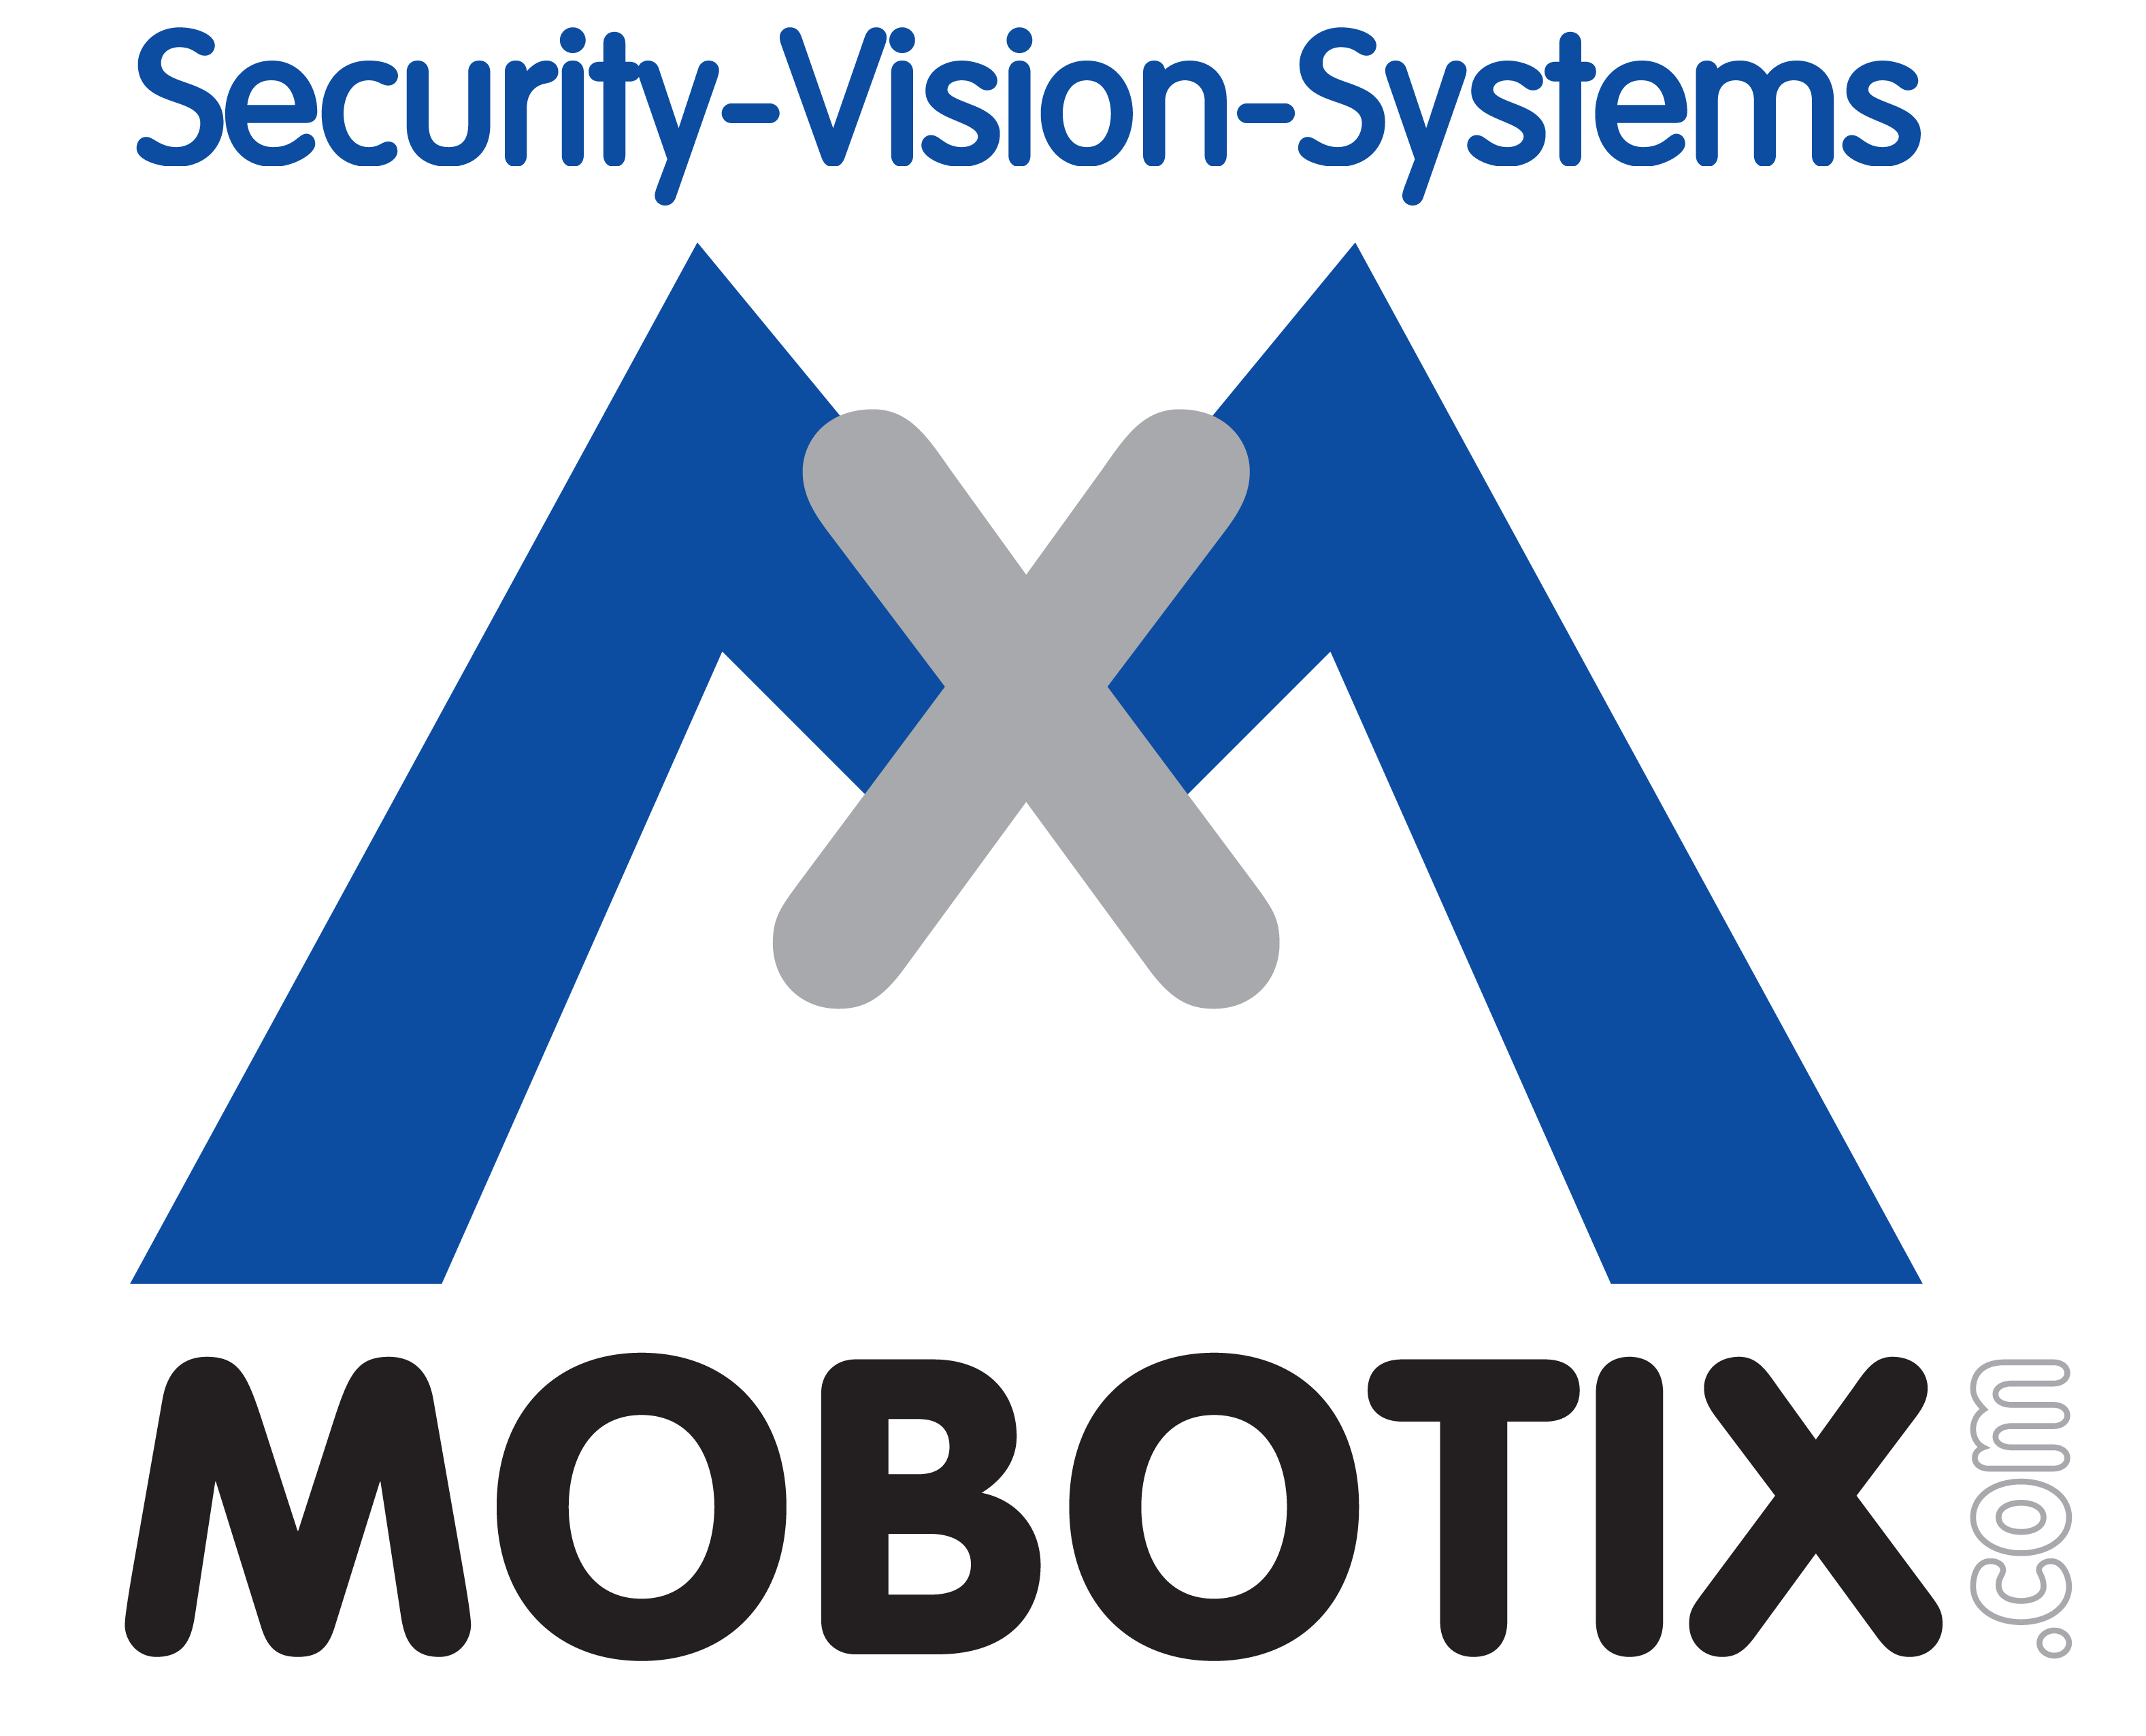 https://myurbansky.com/wp-content/uploads/2019/09/mobotix.png